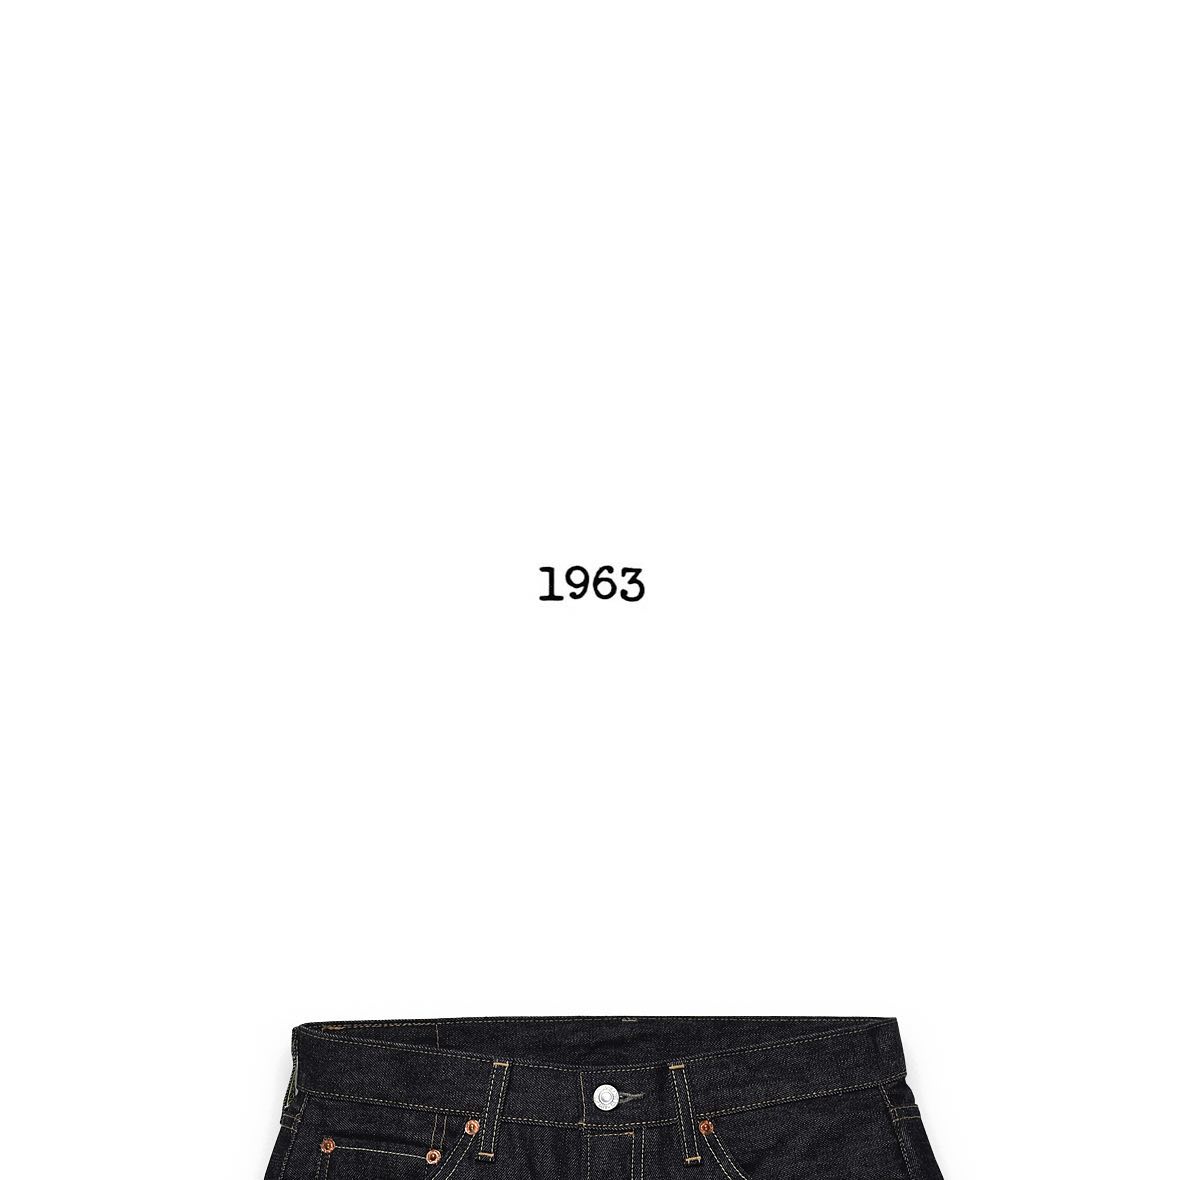 Levi’s® VINTAGE CLOTHING 即将推出 「1963 501®」 限定裤型